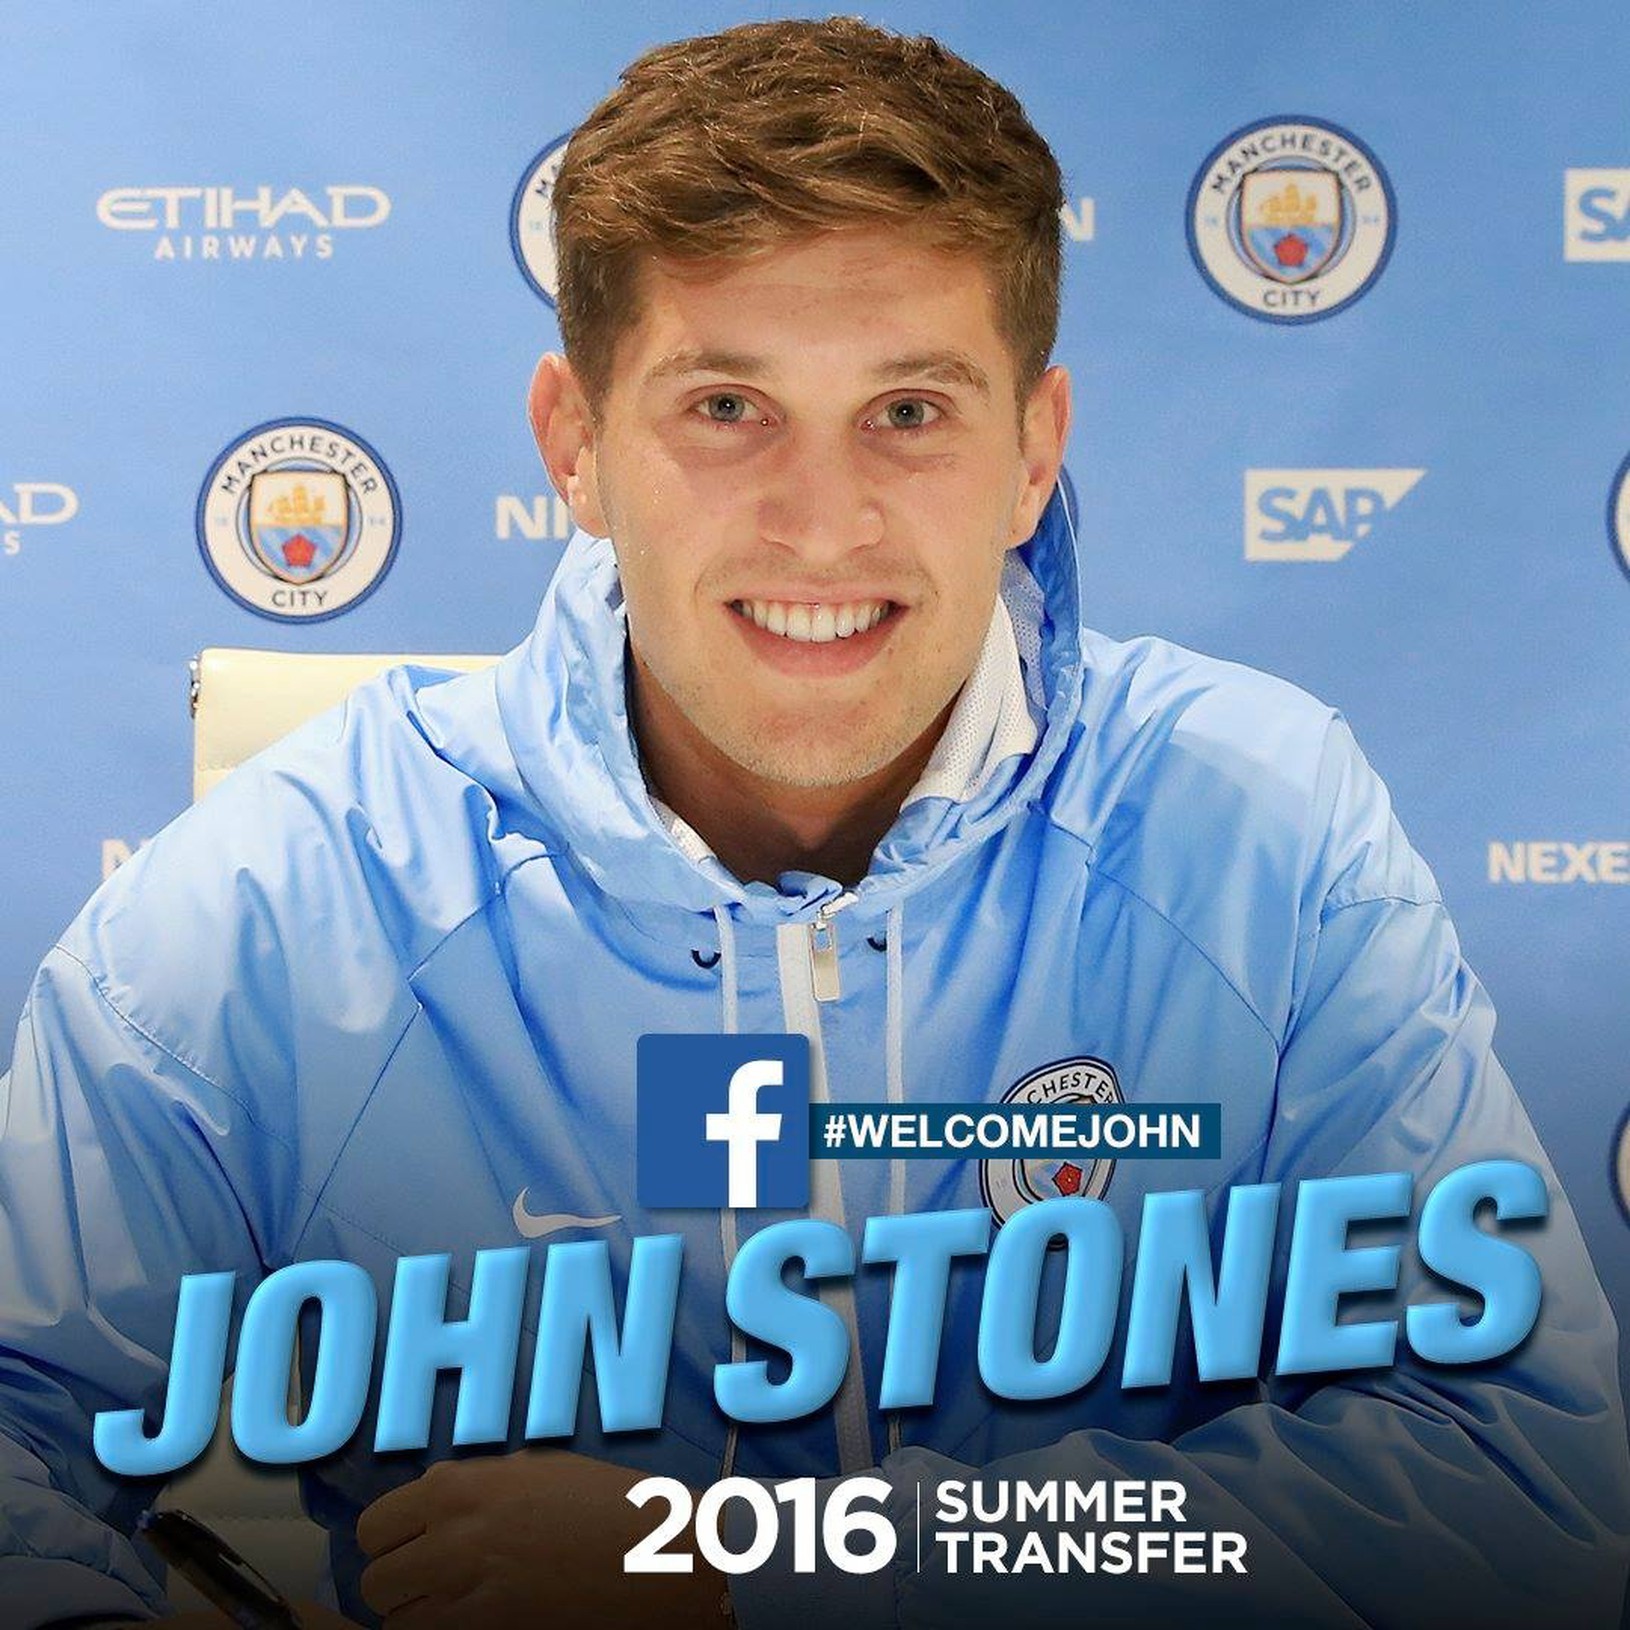 John Stones